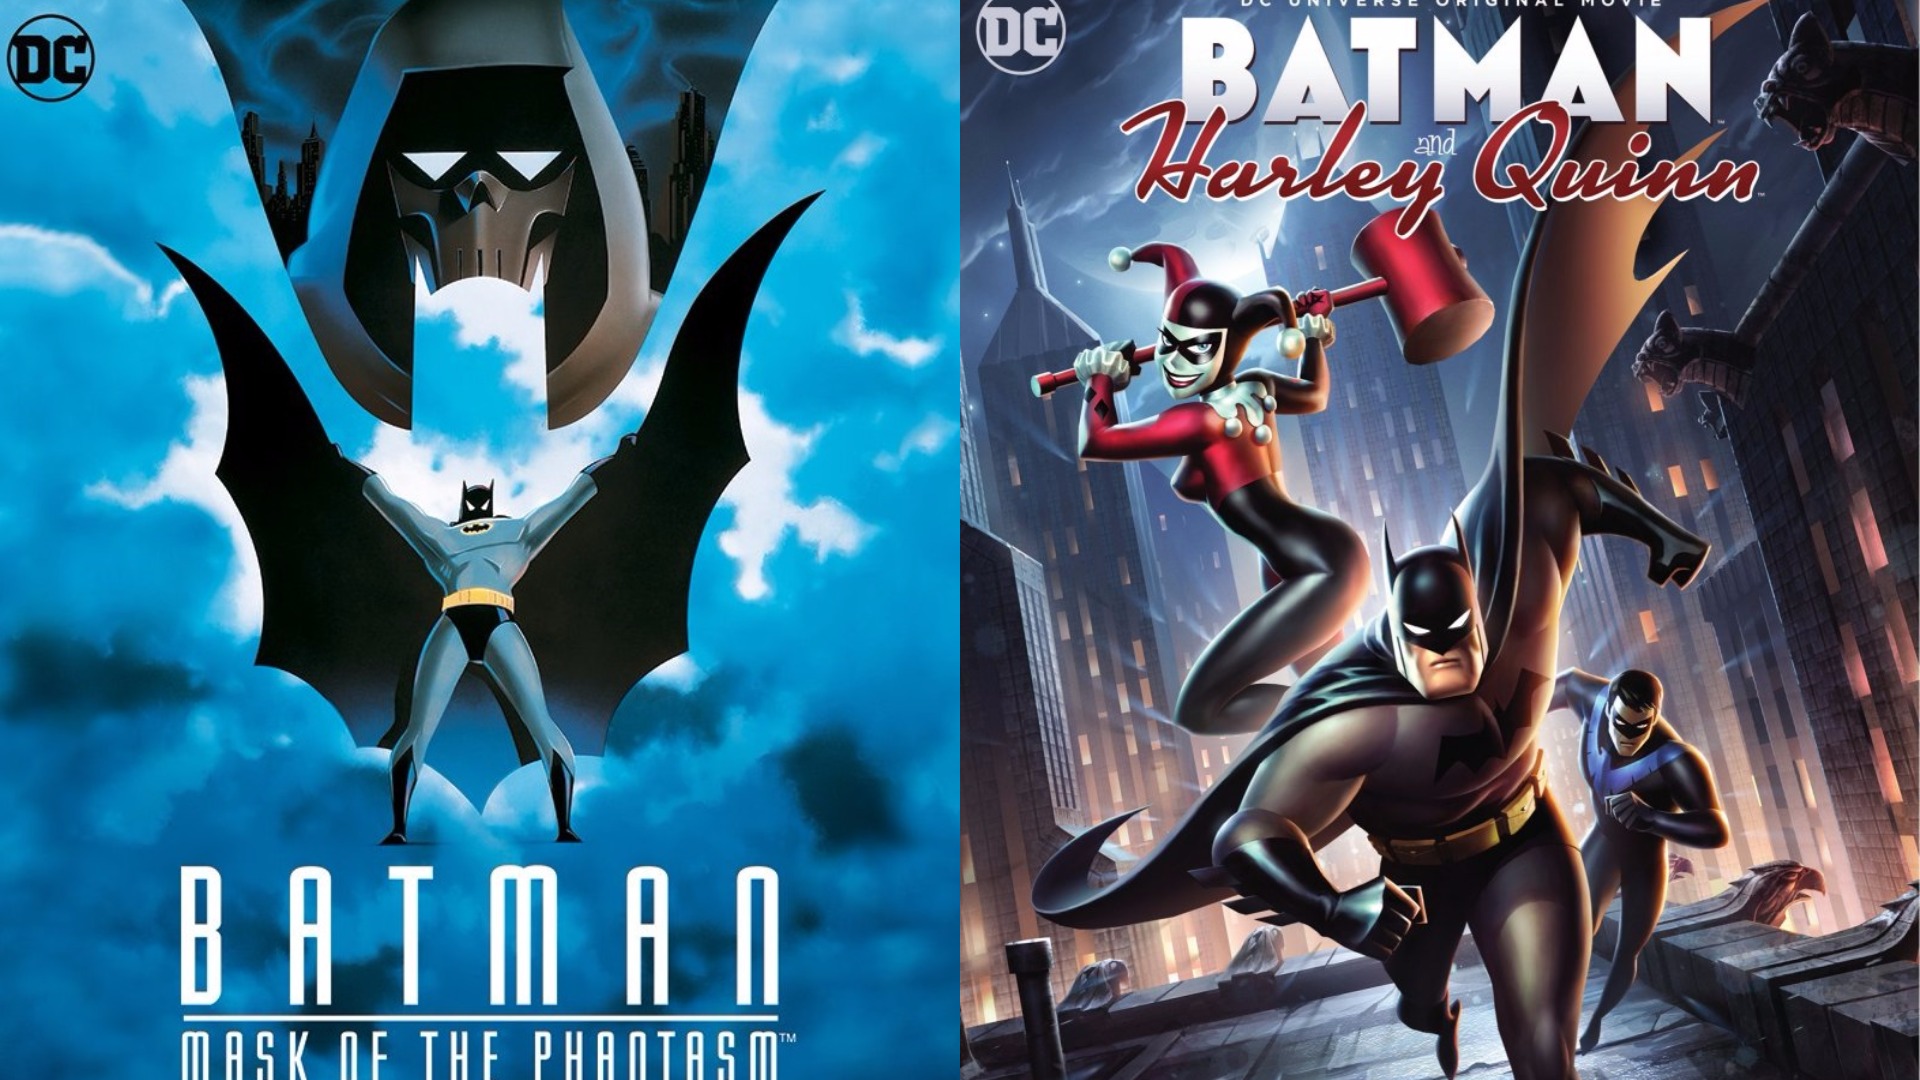 Batman: Mask of the Phantasm to Get a 1080p Release! Superheroes daily dose of Superheroes news